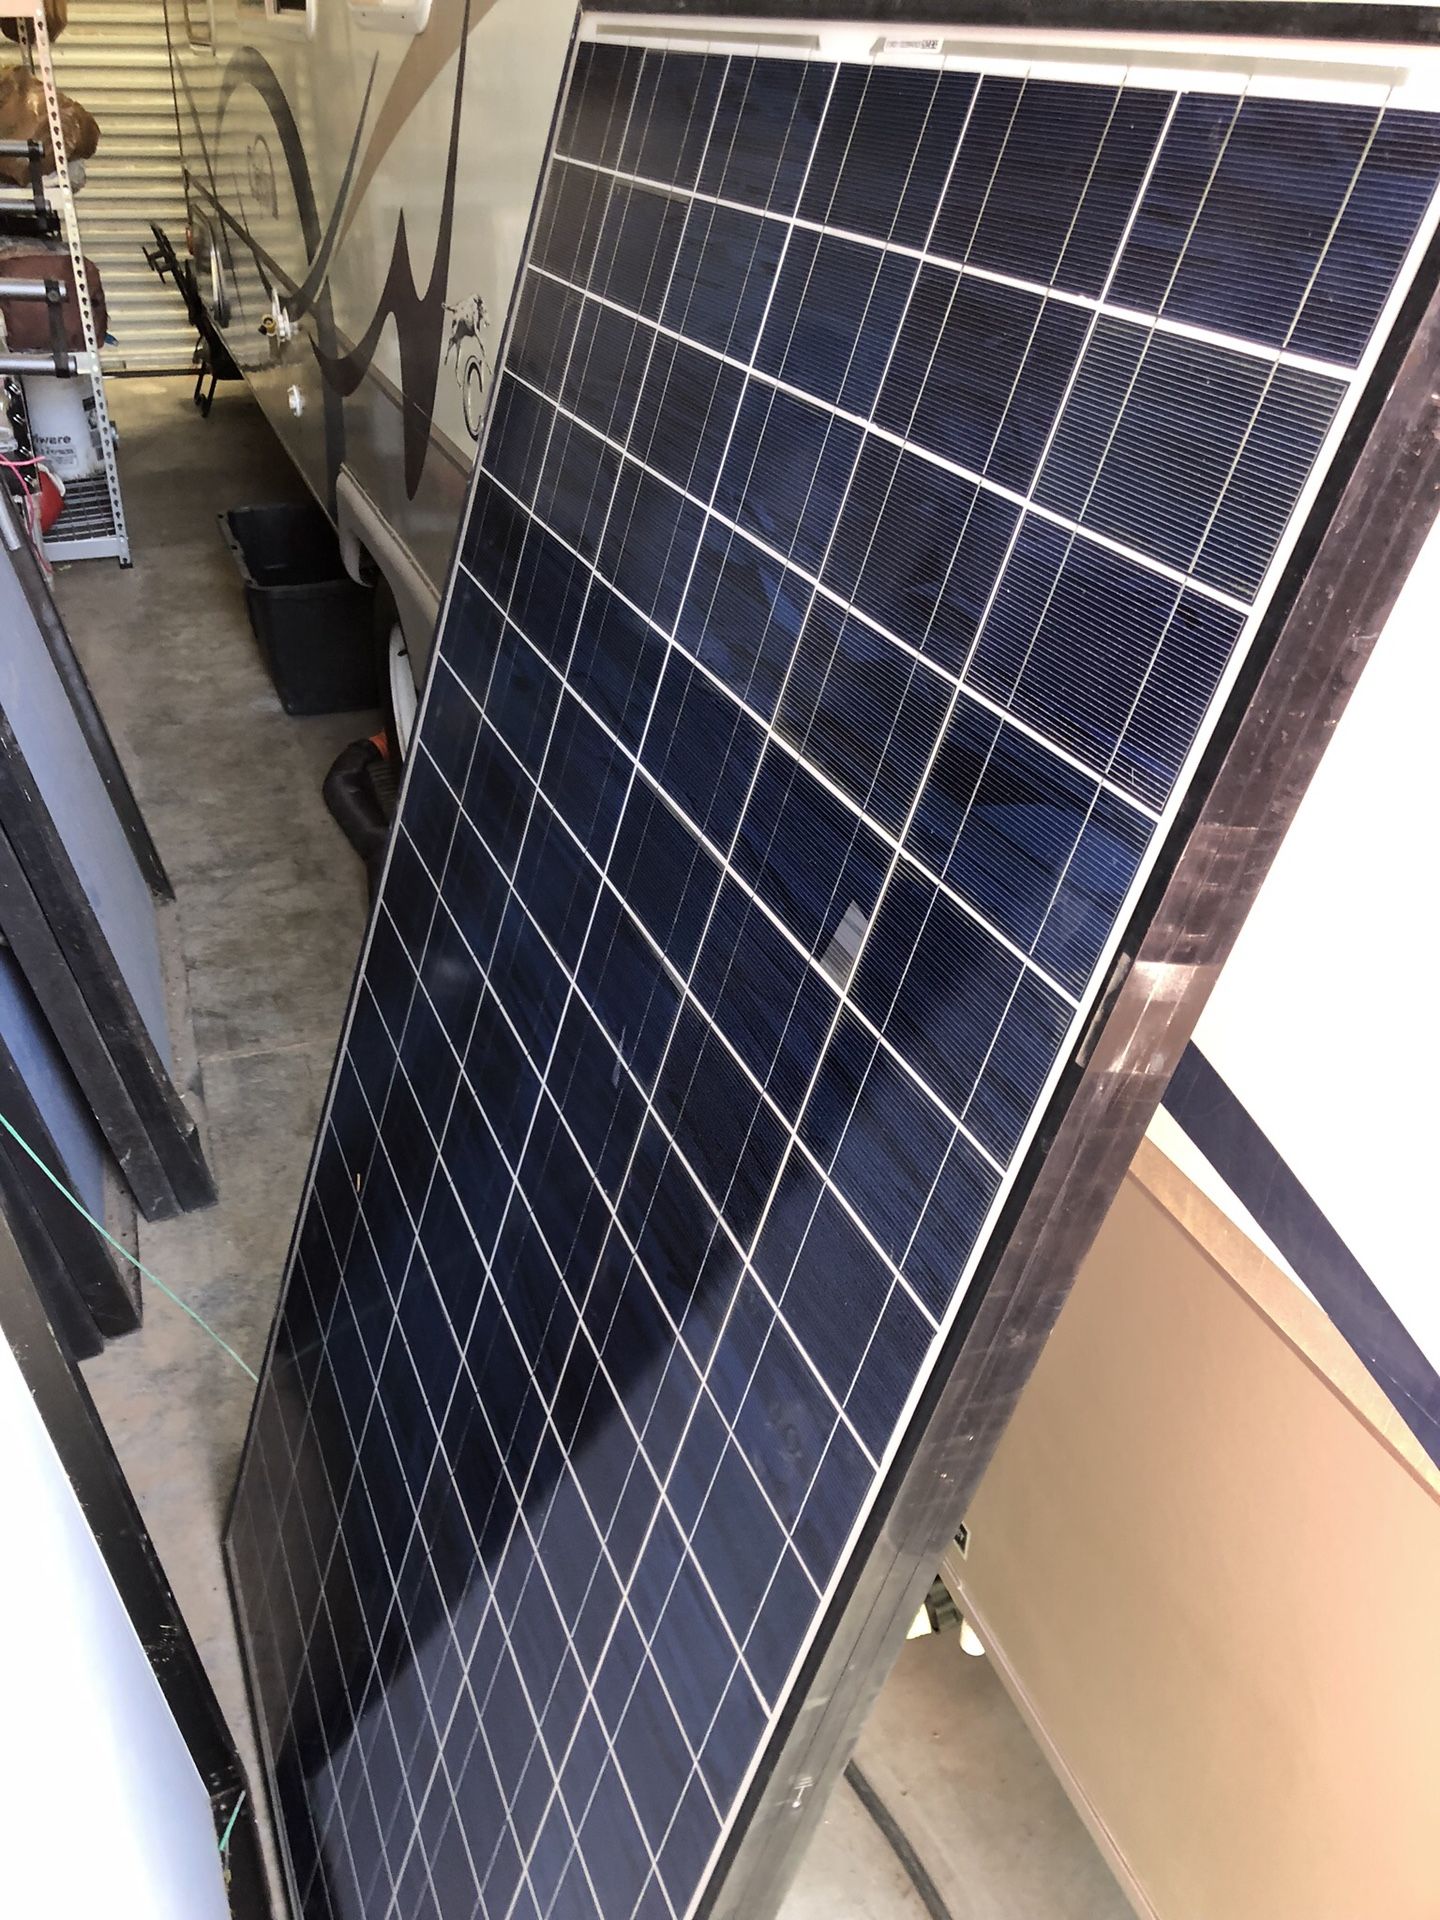 Solar panels and inverter